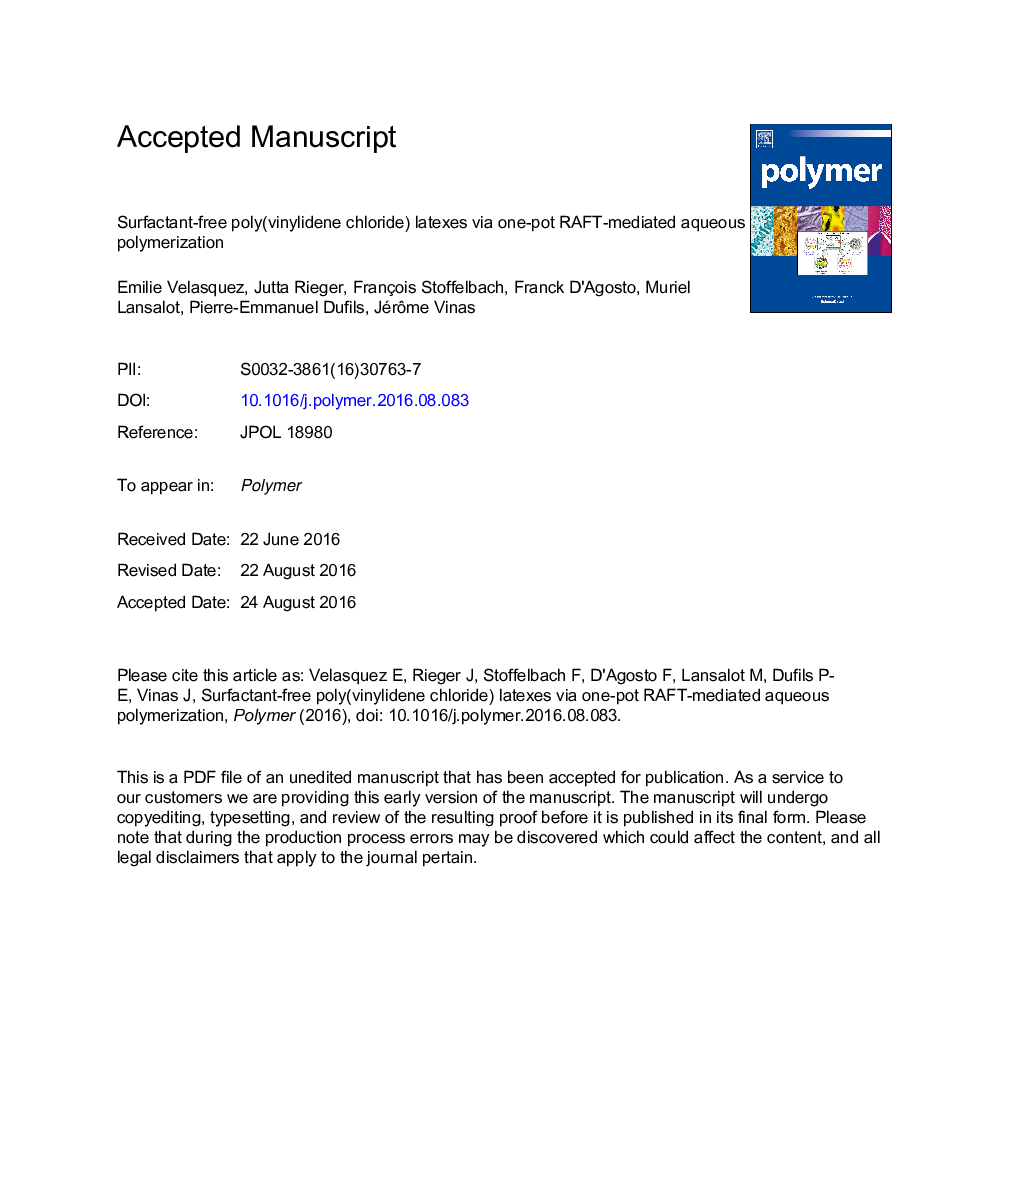 Surfactant-free poly(vinylidene chloride) latexes via one-pot RAFT-mediated aqueous polymerization